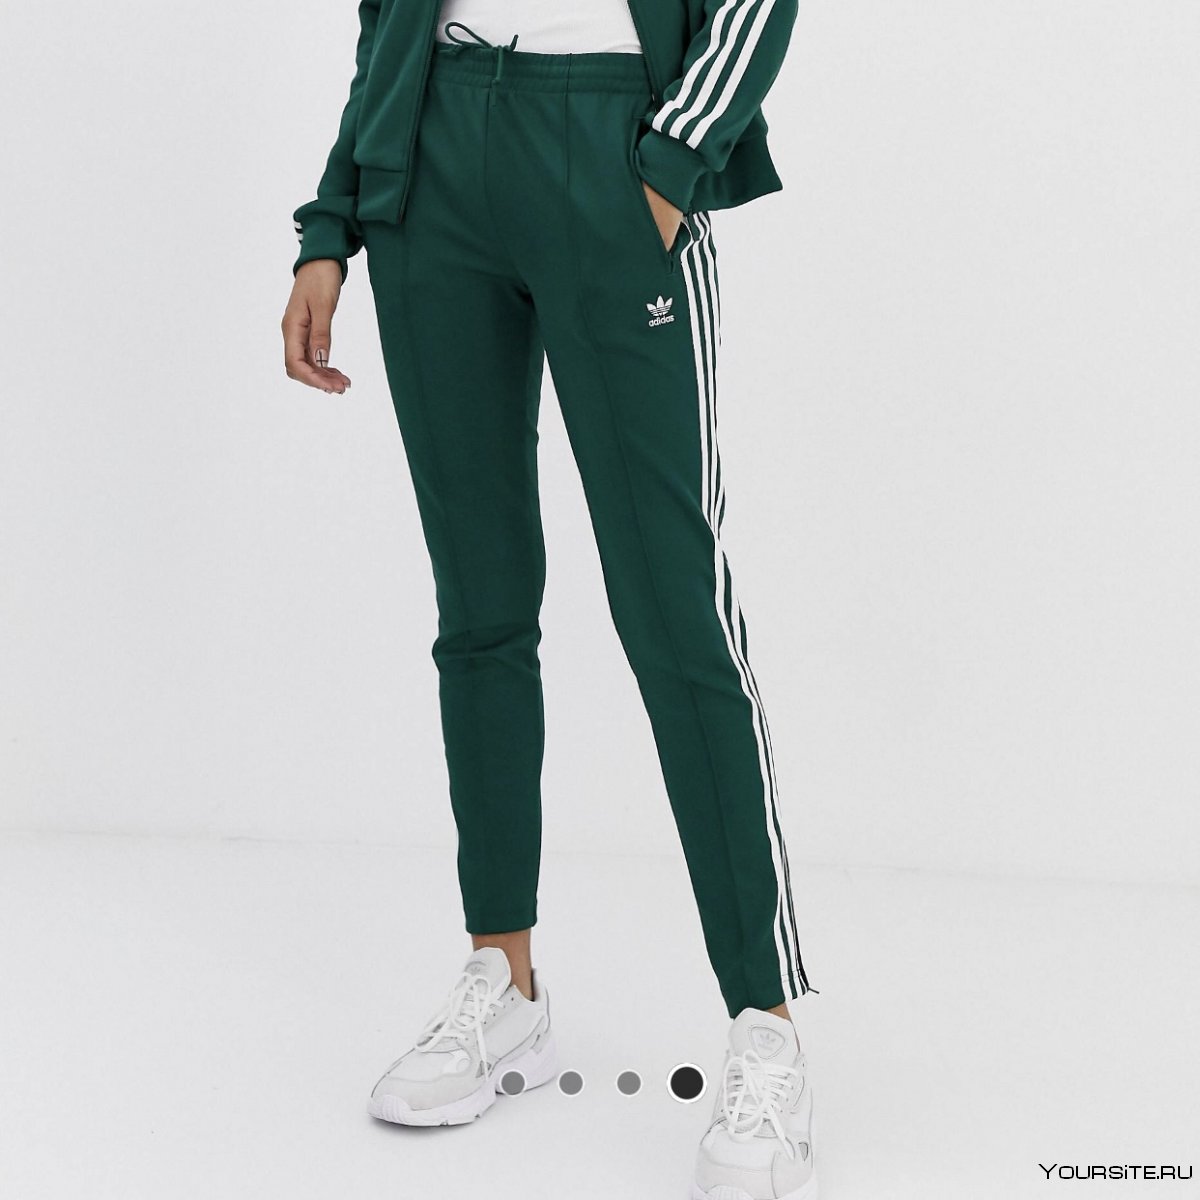 Adidas брюки зеленые адиколор